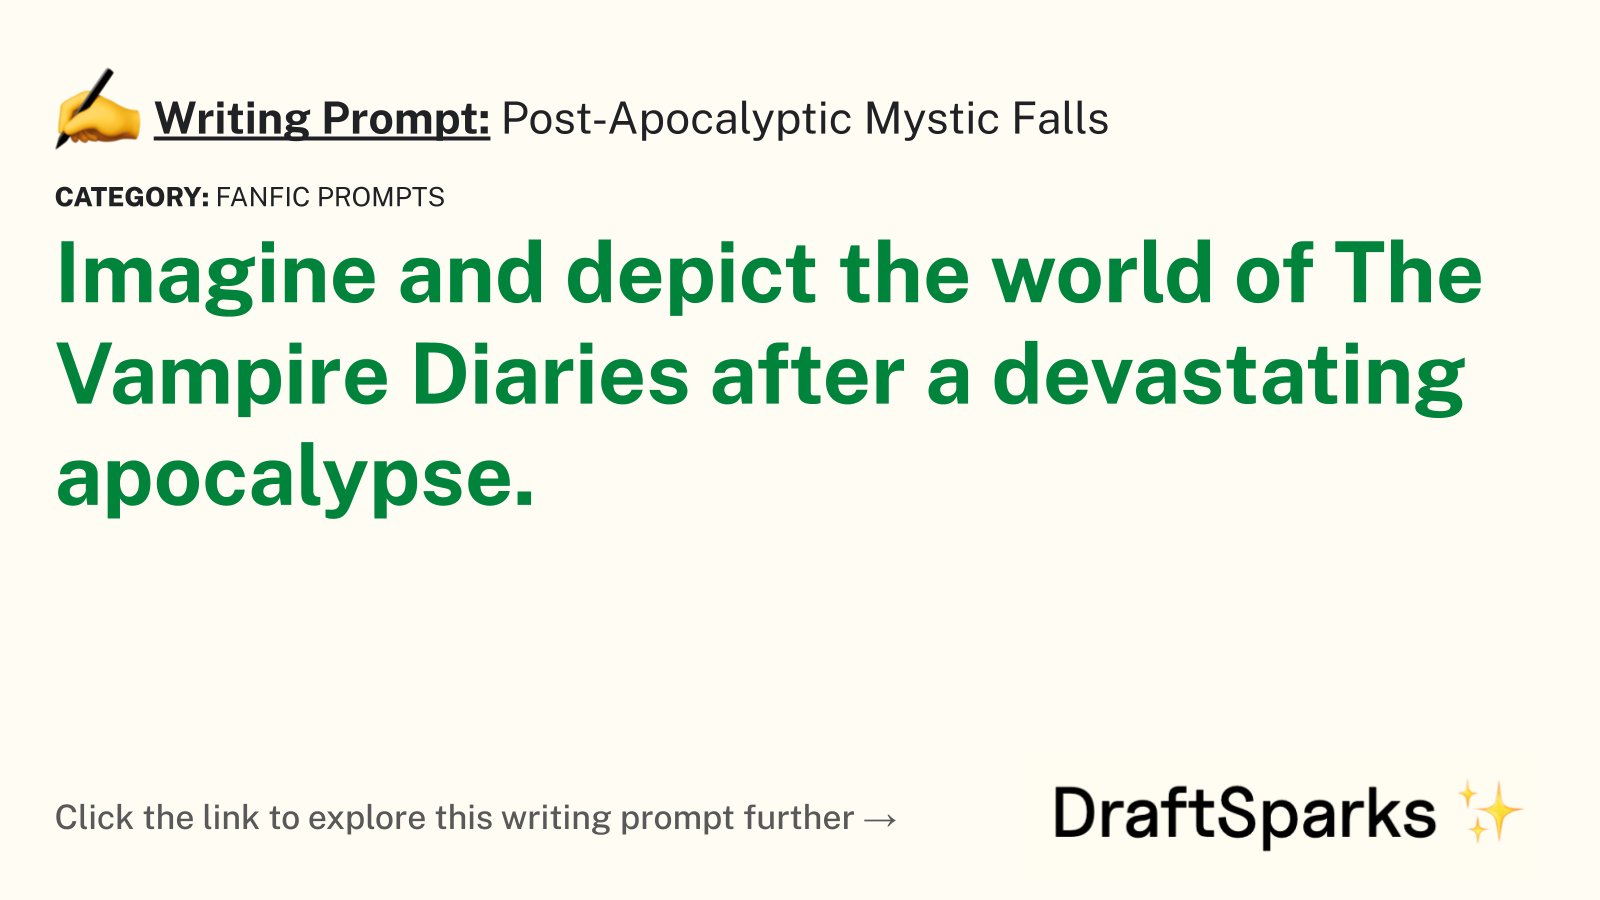 Post-Apocalyptic Mystic Falls